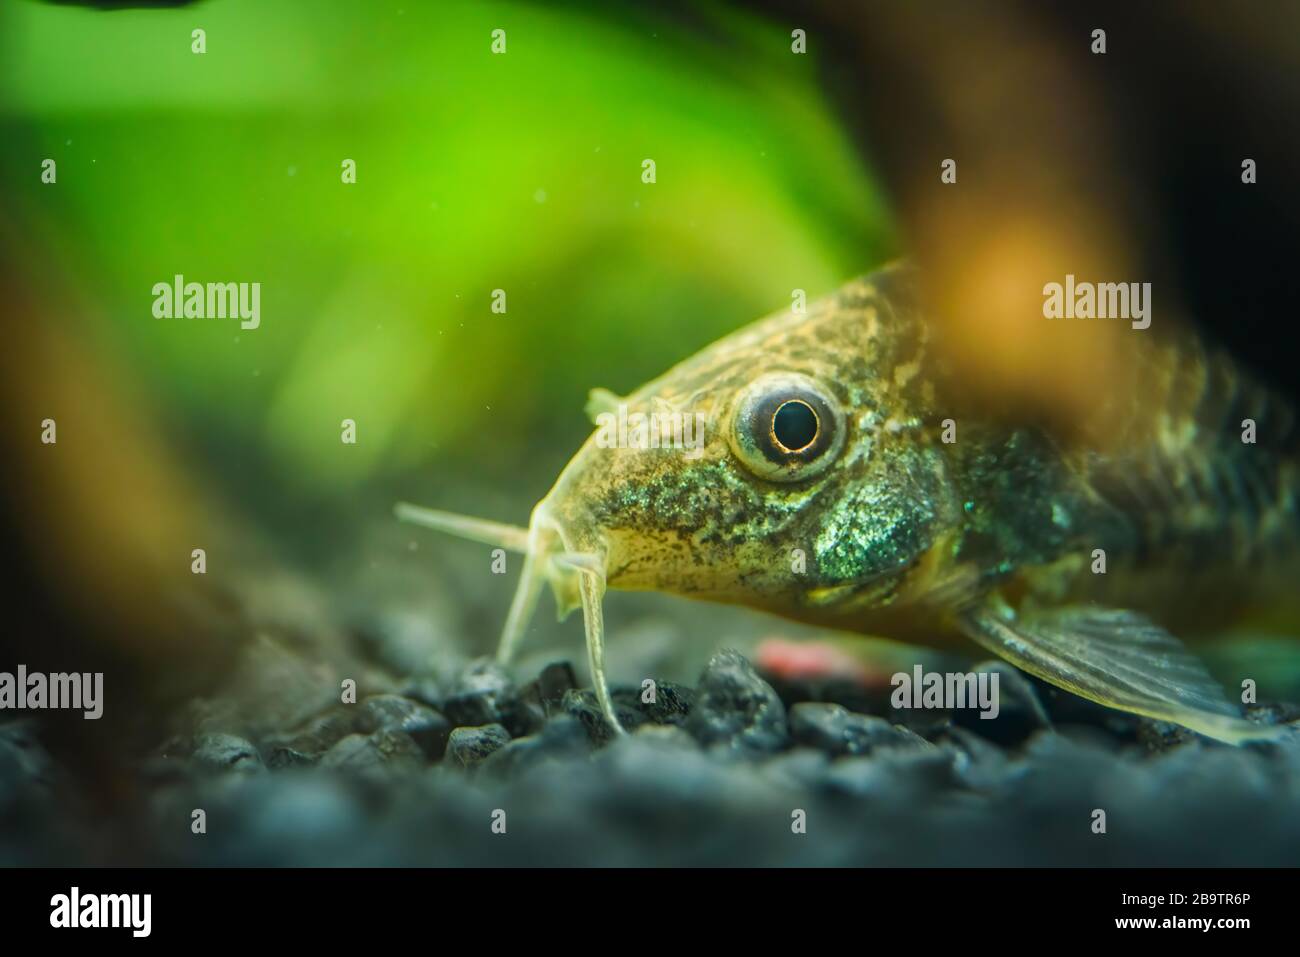 Small catfish Corydoras frontal closeup with blurred natural background. Stock Photo